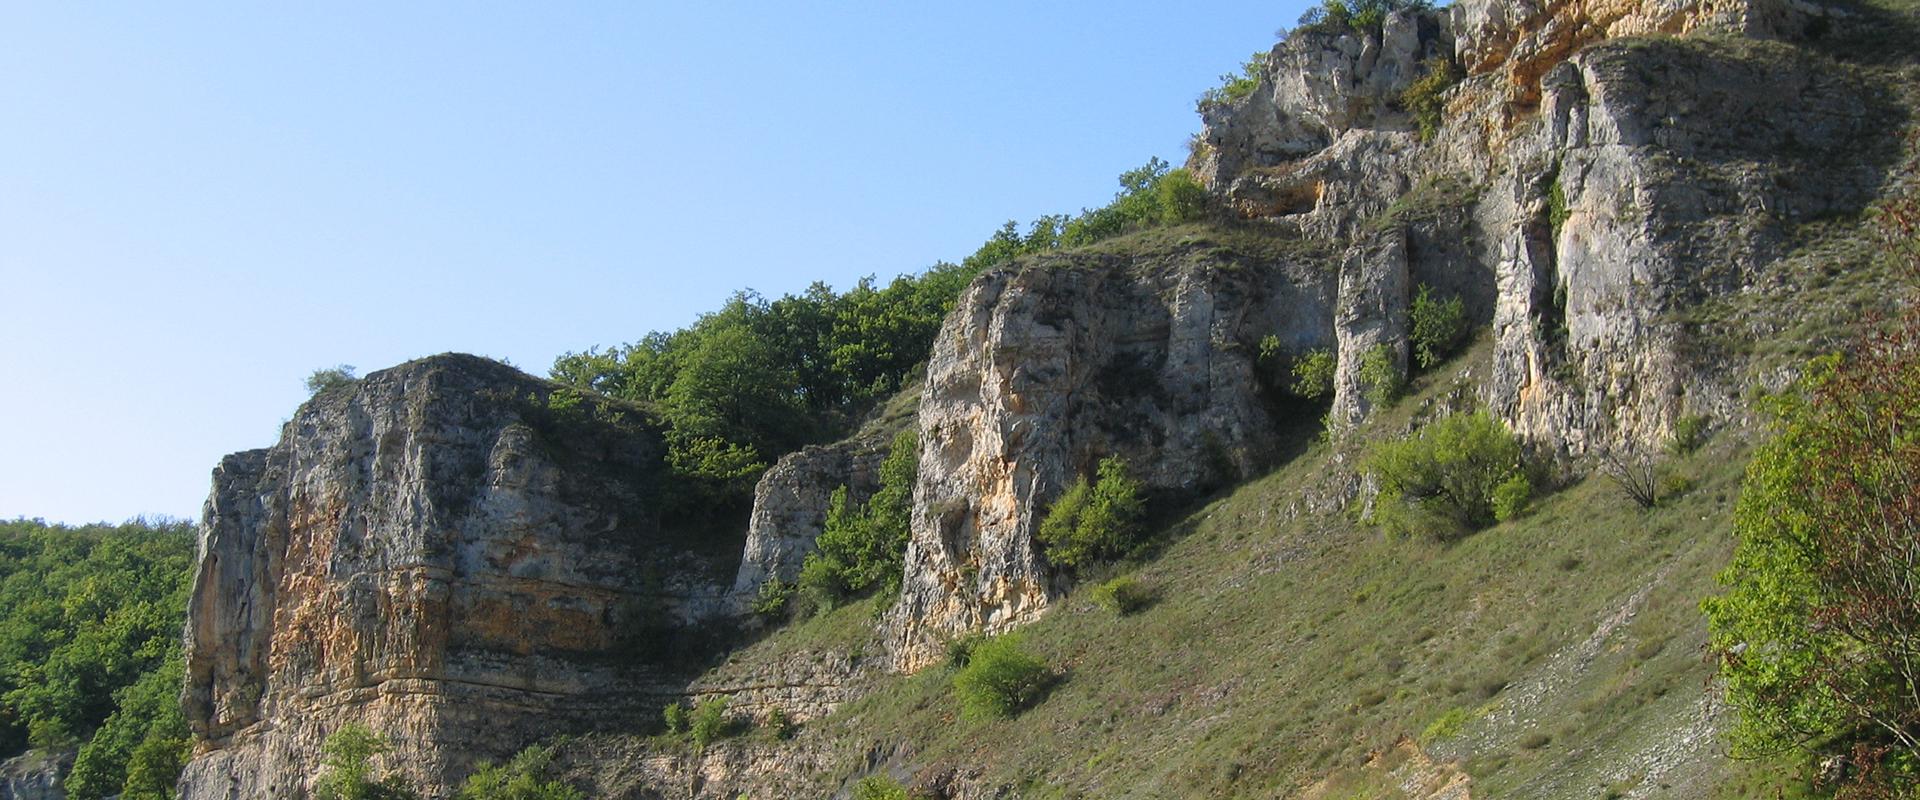 The cliffs of Saint-Moré, Burgundy